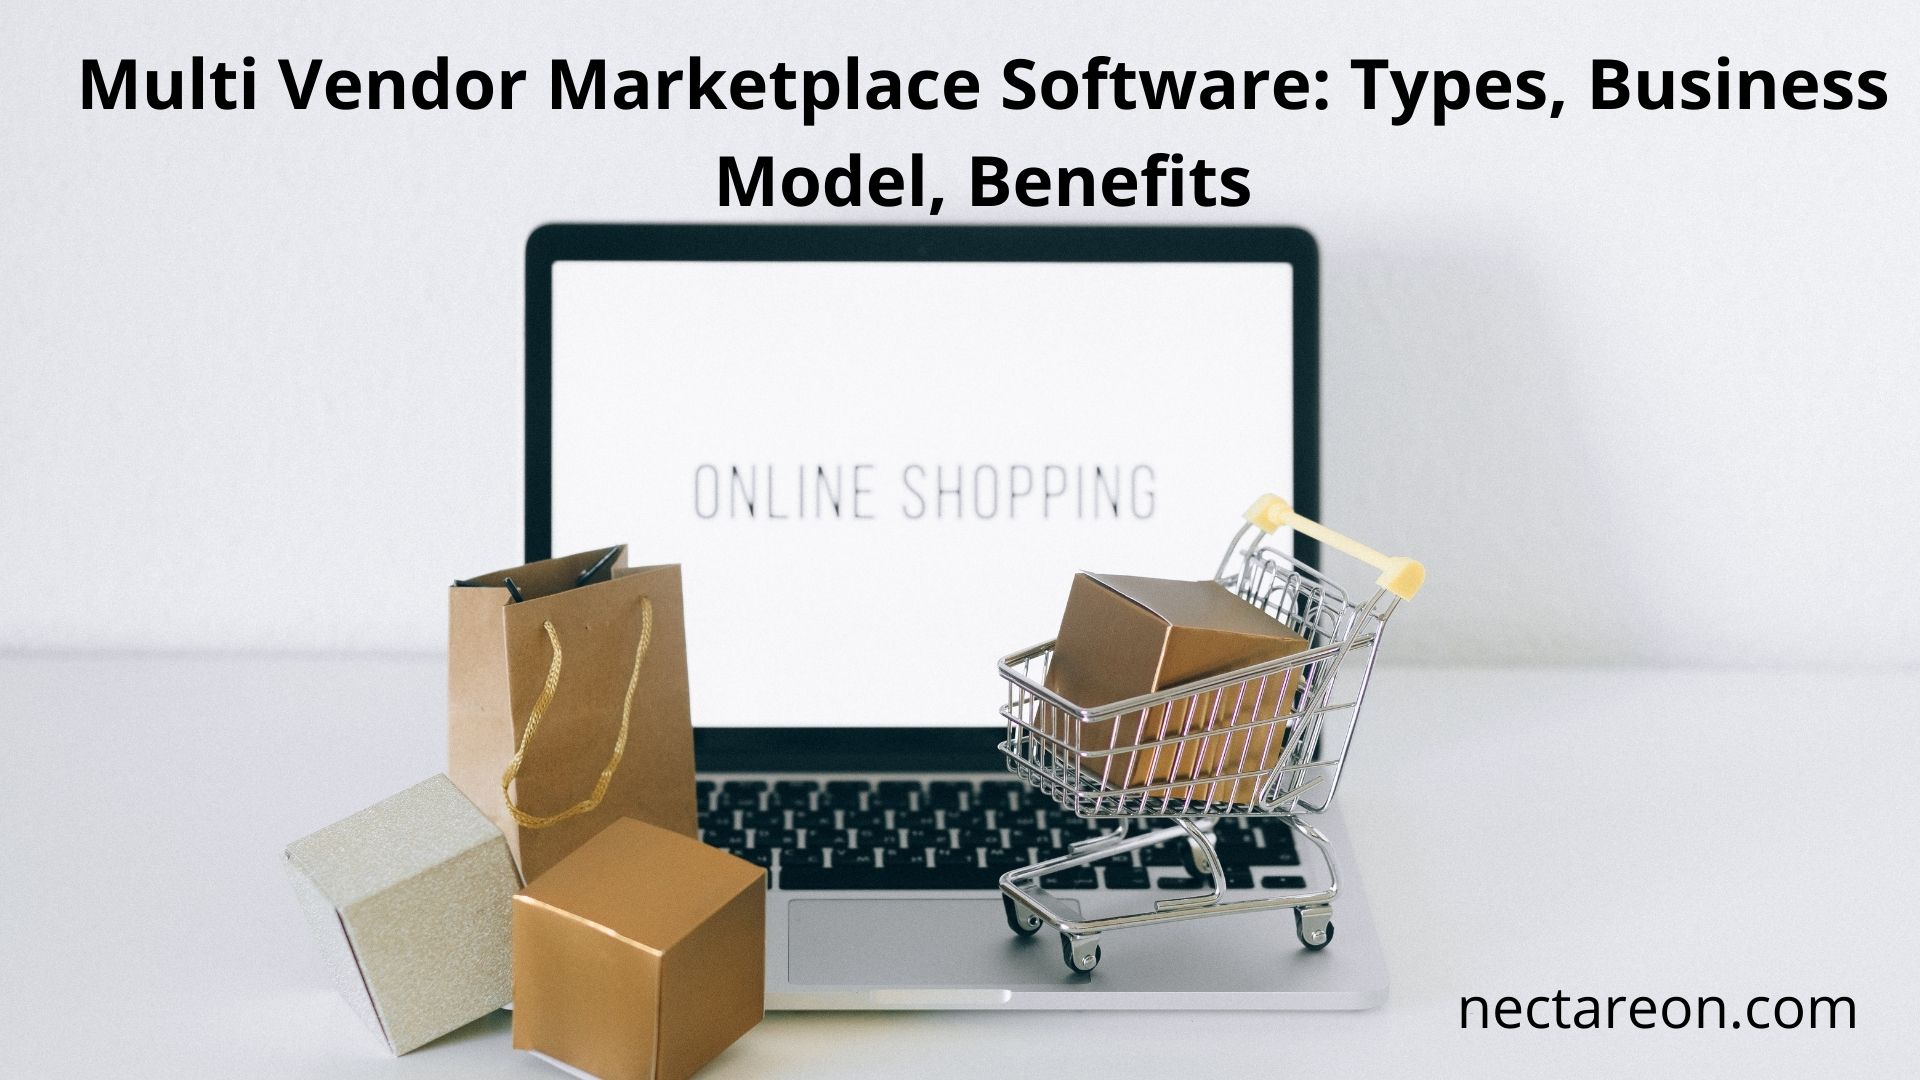 Multi Vendor Marketplace Software: Types, Business Model, Benefits